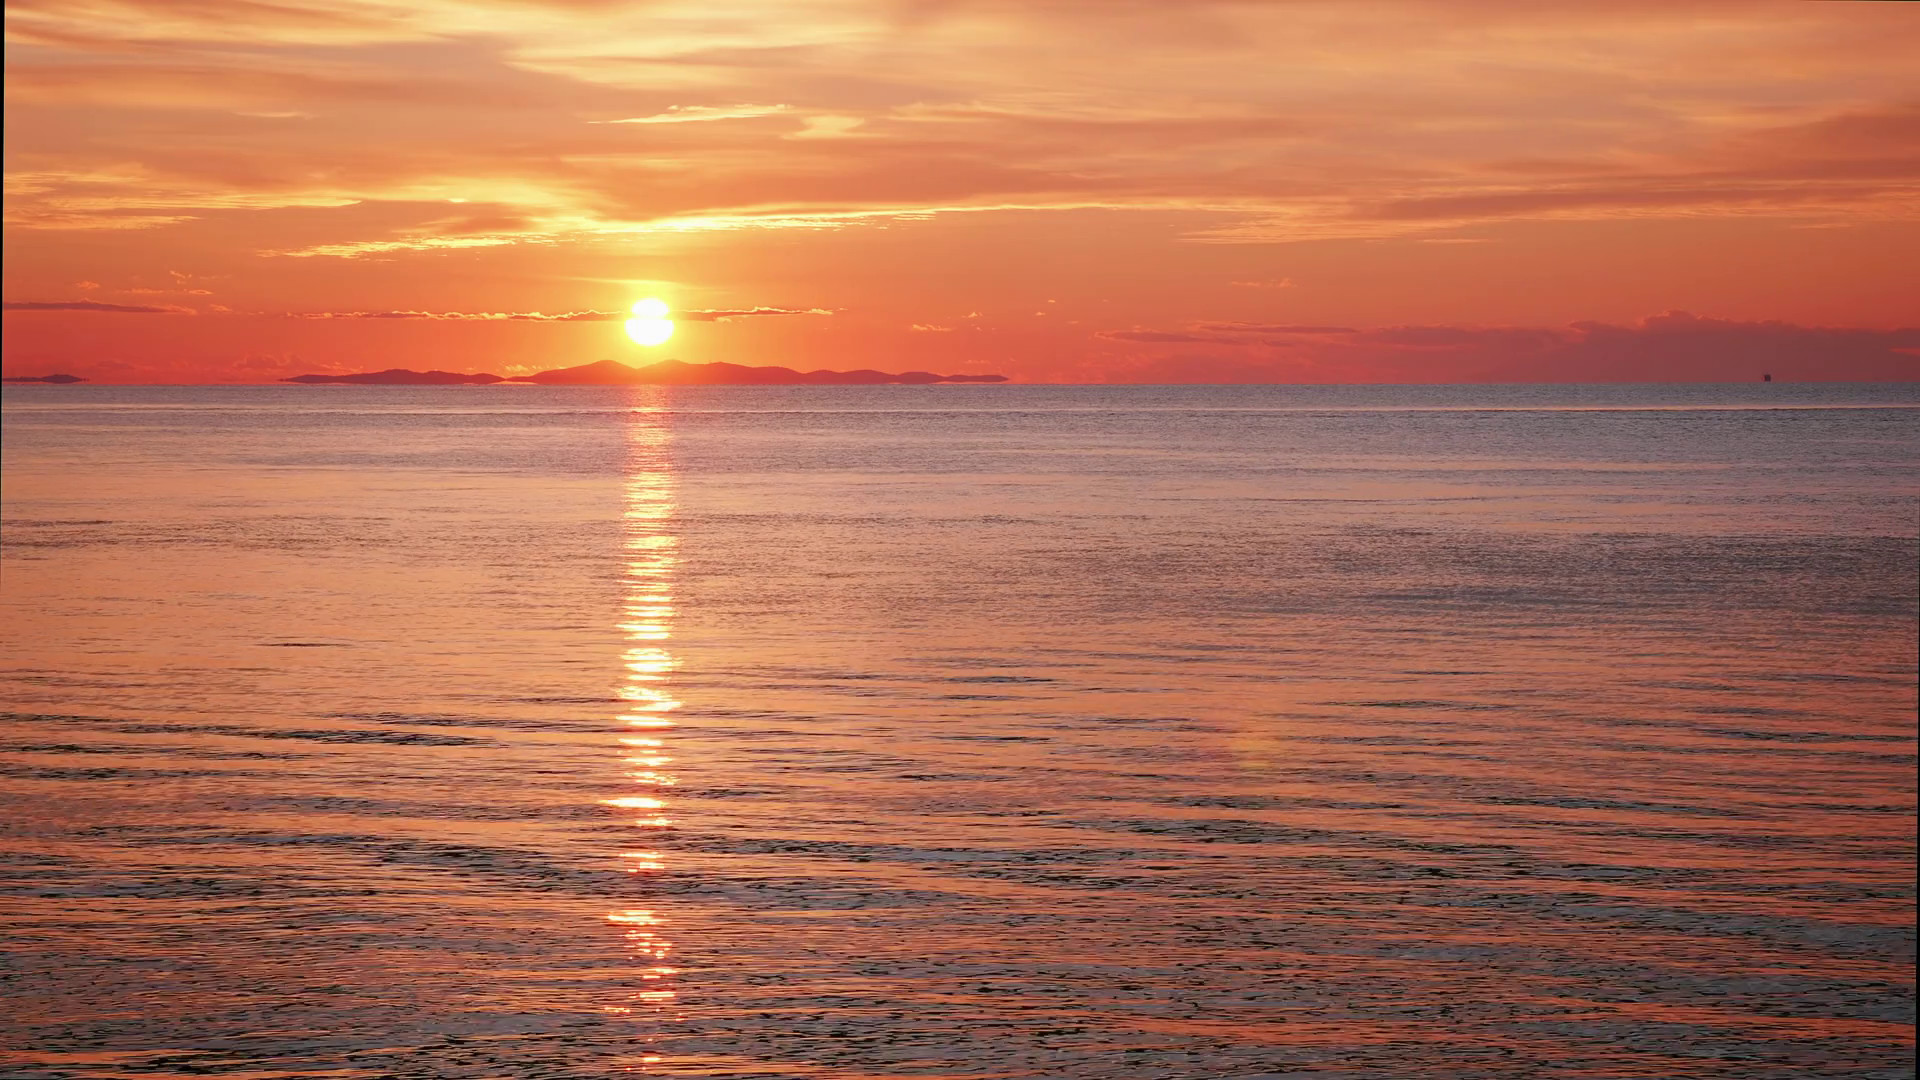 1920x1080 Beautiful sunset scenery ripple sea water surface peaceful romantic  seascape wallpaper colourful purple sky sun reflection Stock Video Footage  - VideoBlocks